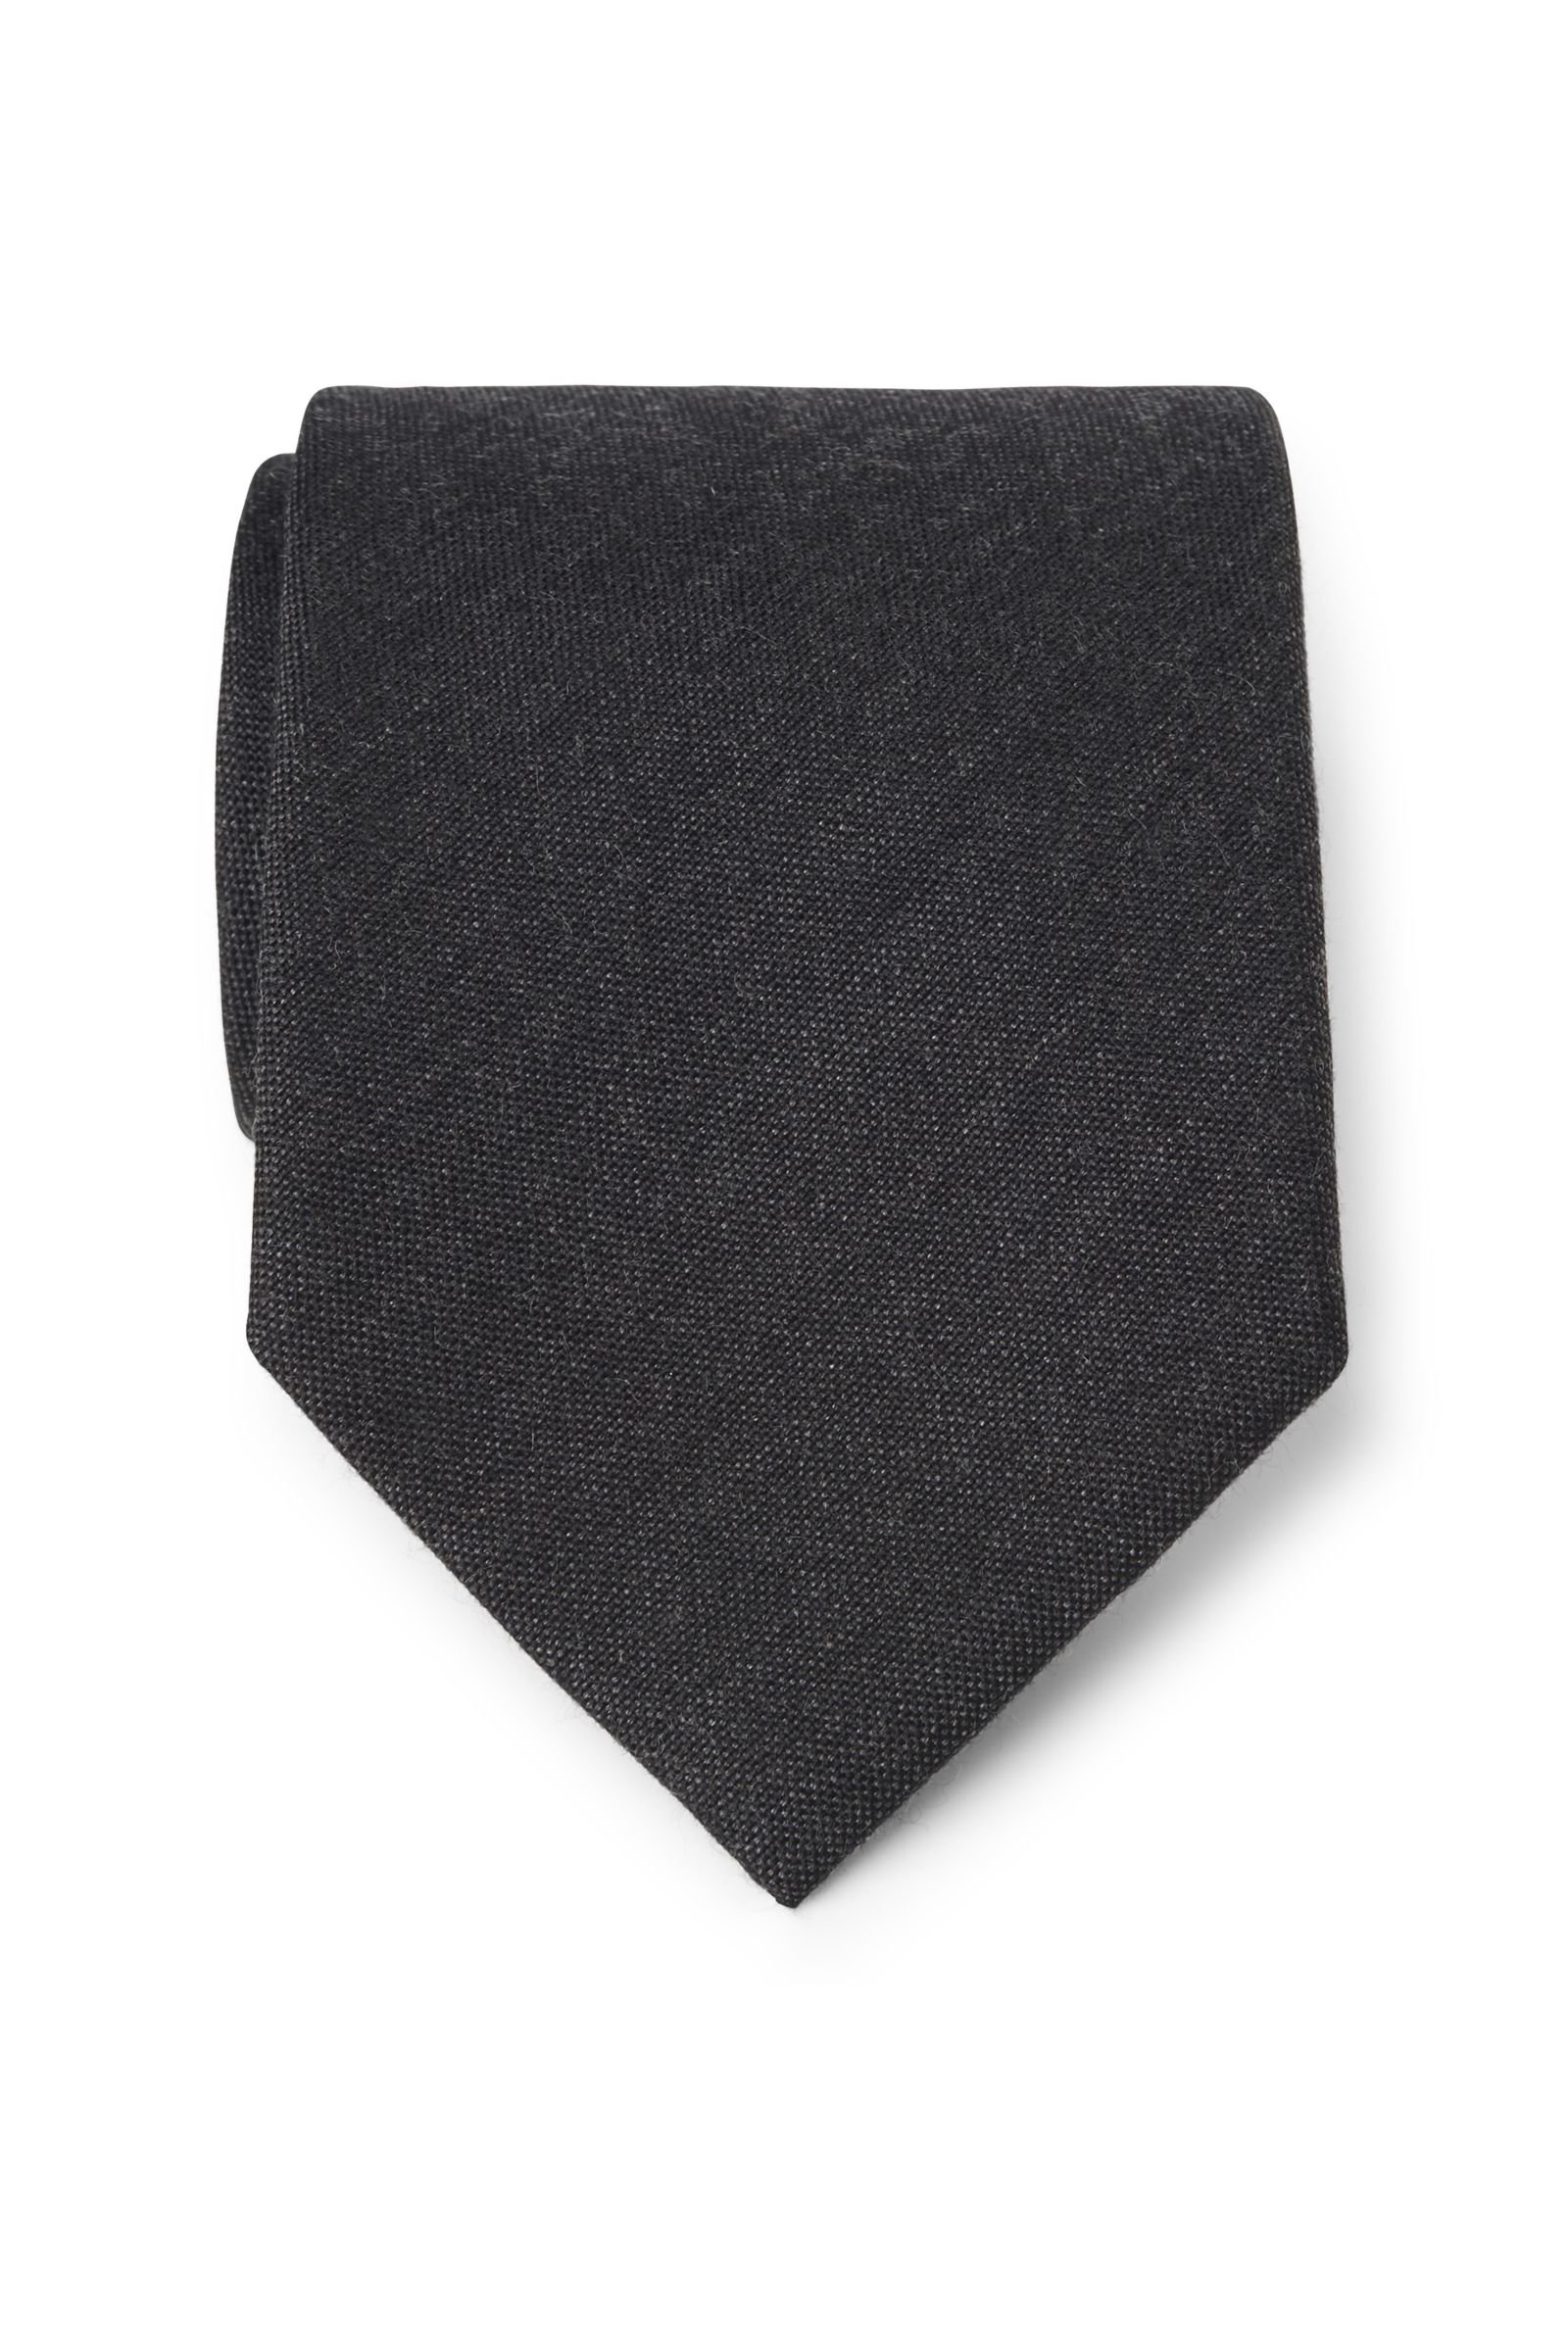 Cashmere Krawatte anthrazit